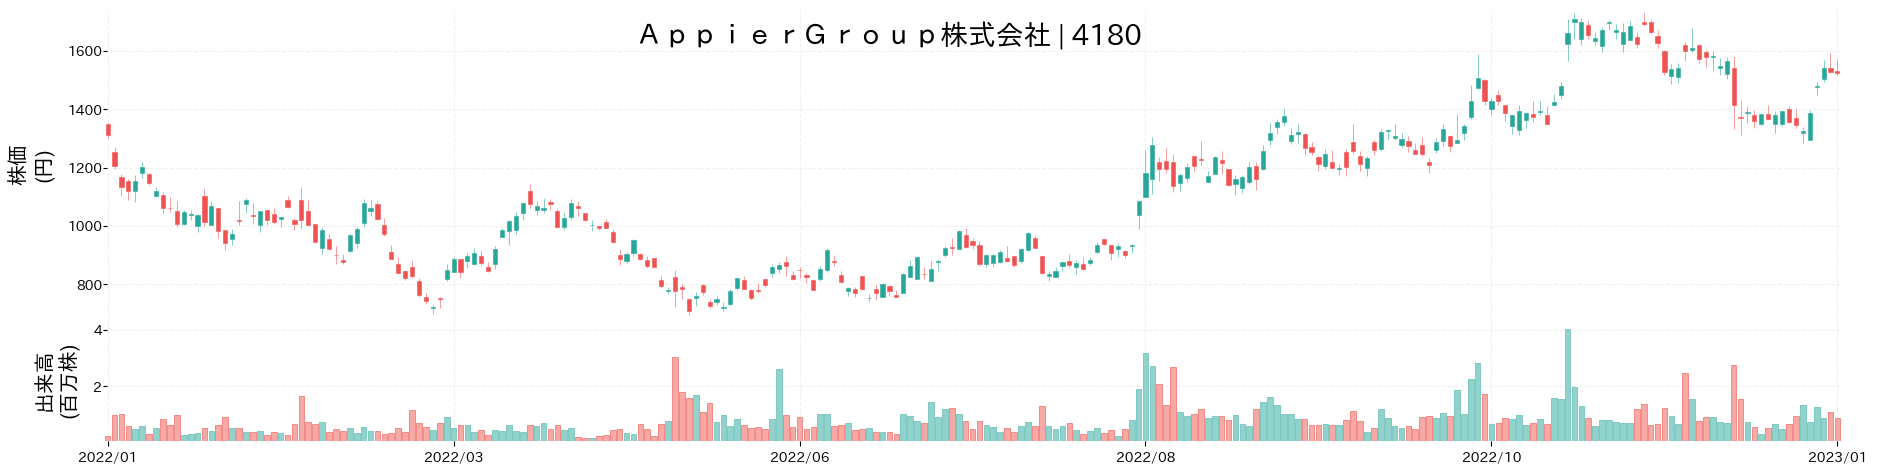 Appier Groupの株価推移(2022)